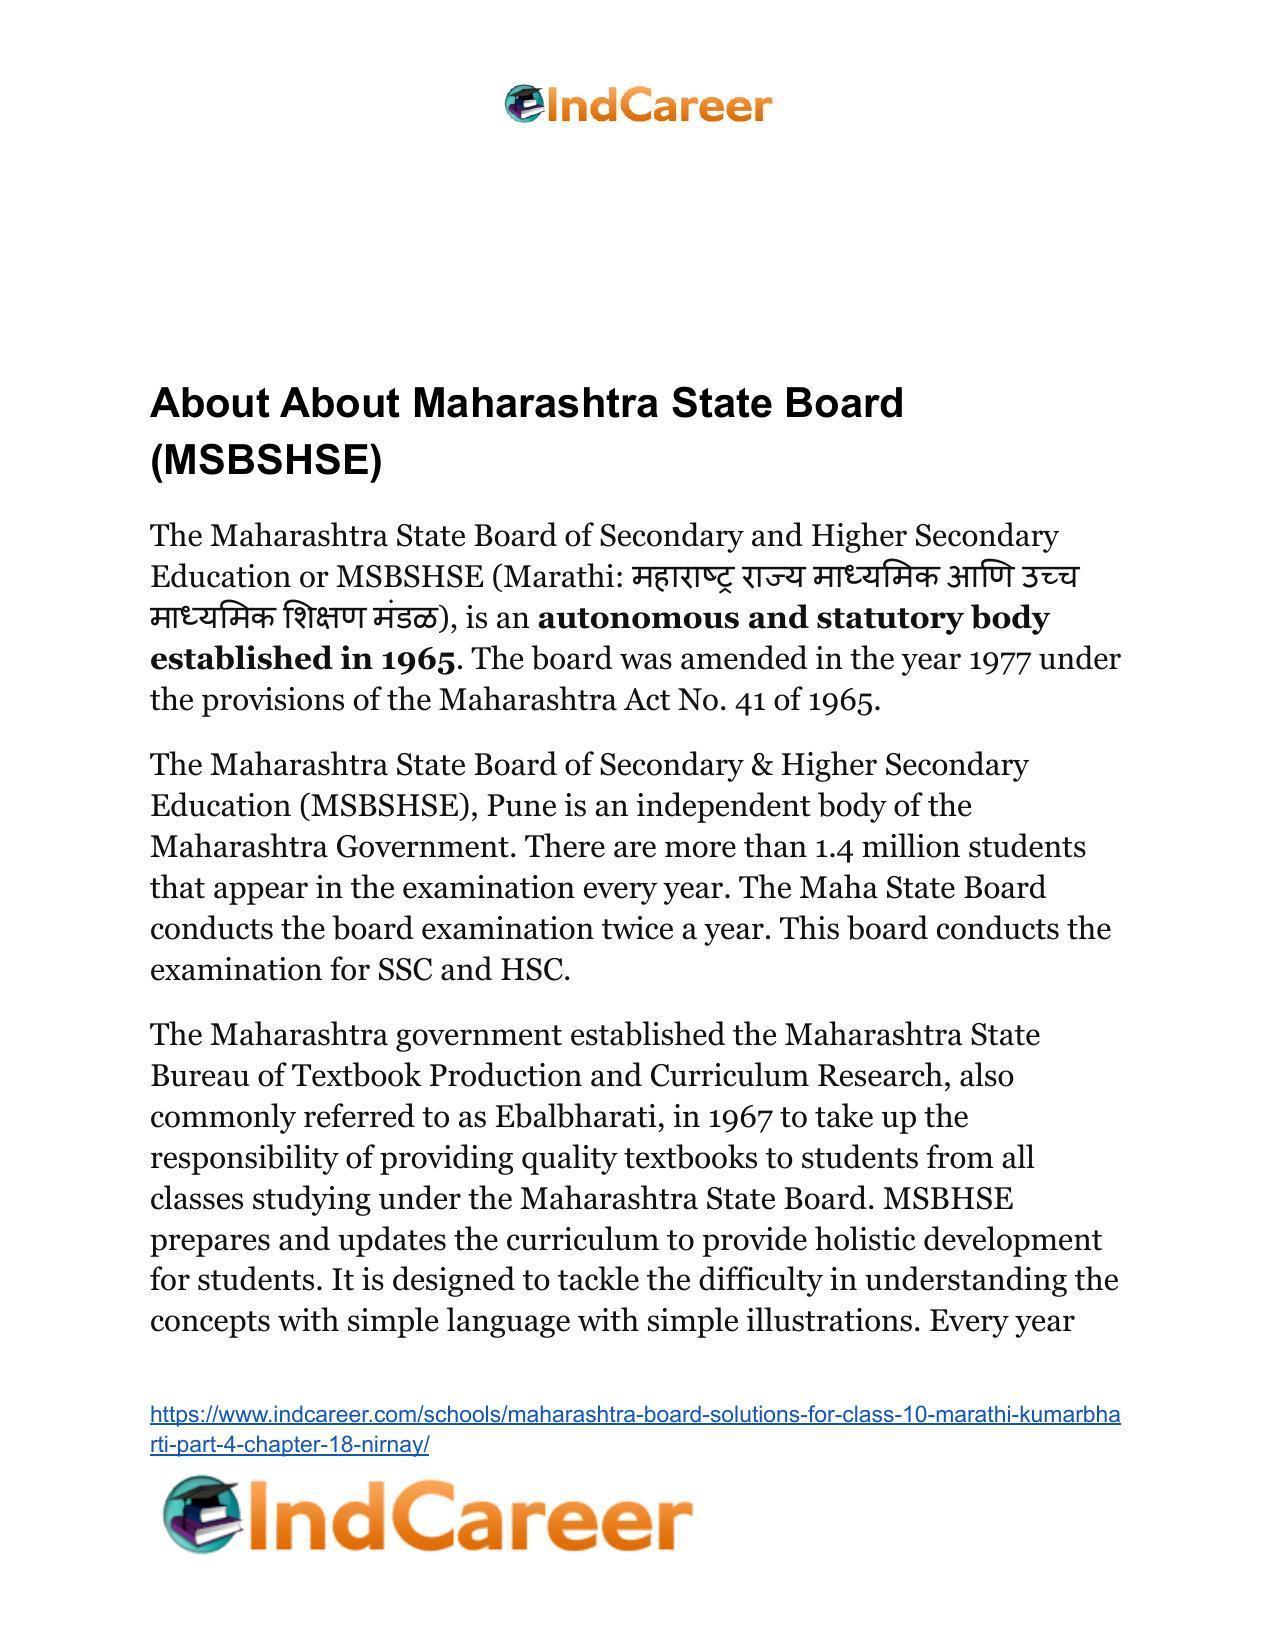 Maharashtra Board Solutions for Class 10- Marathi Kumarbharti (Part- 4): Chapter 18- निर्णय - Page 34